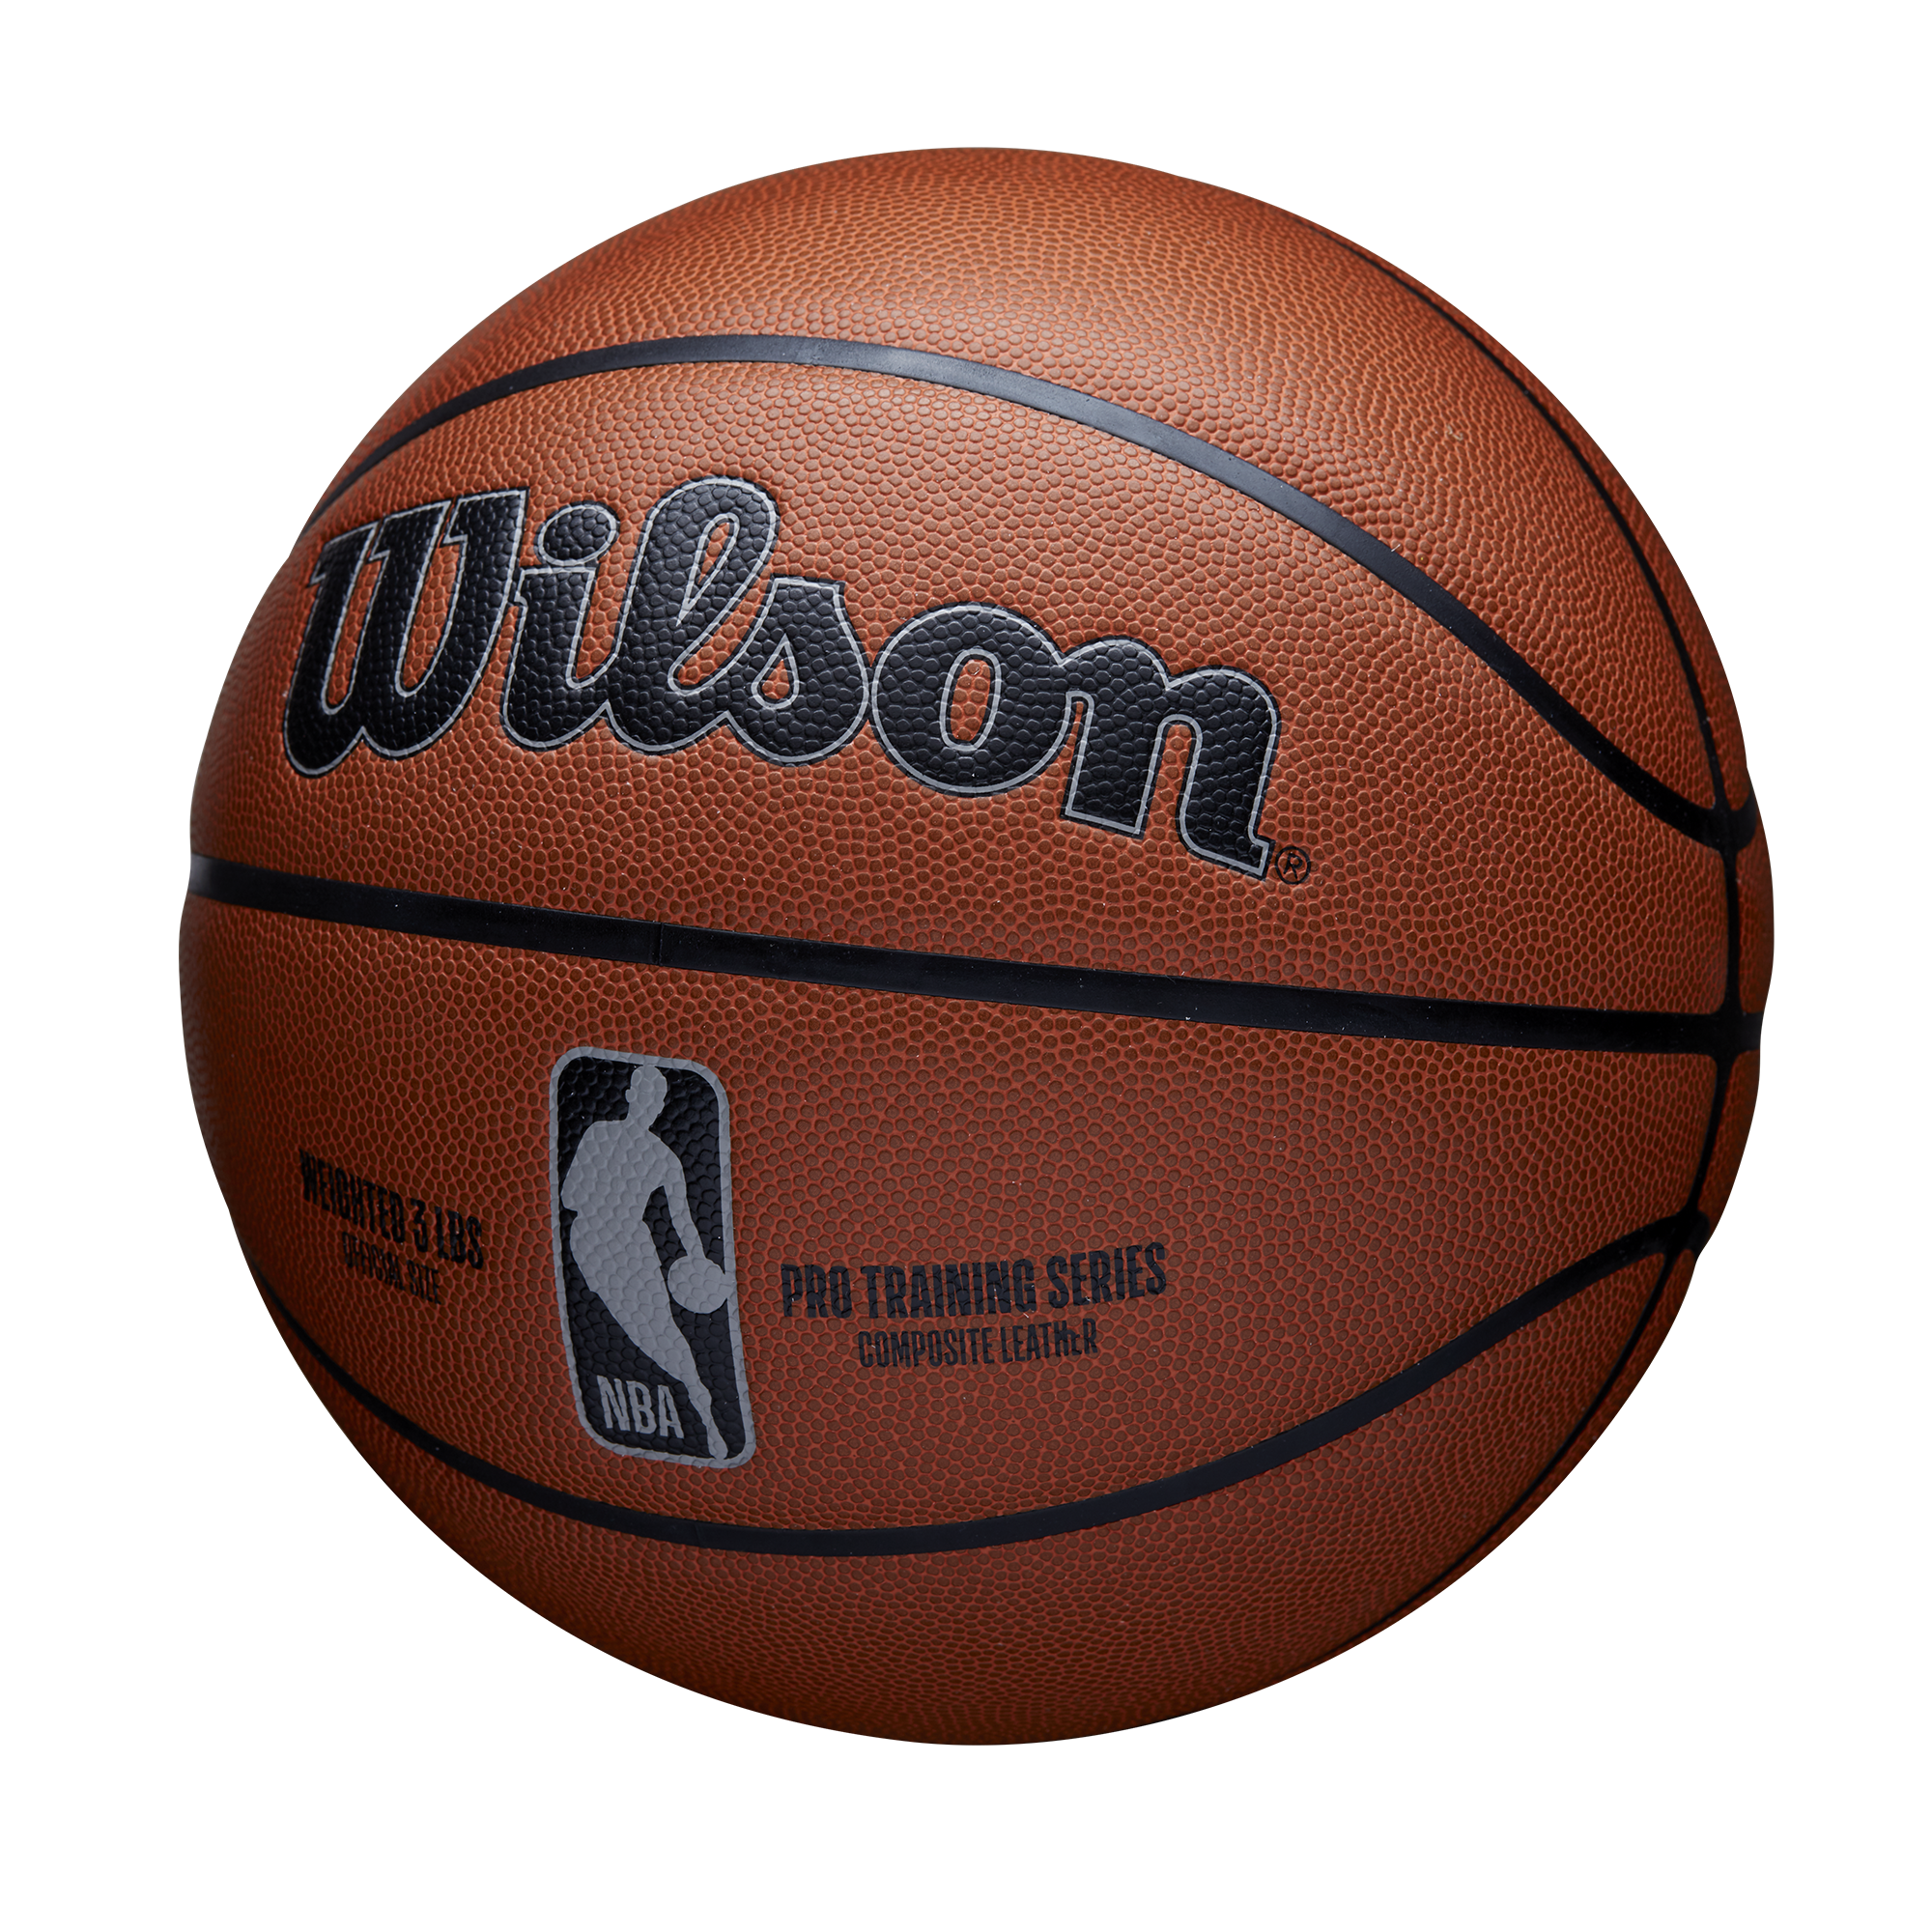 Wilson NBA Weighted Basketball